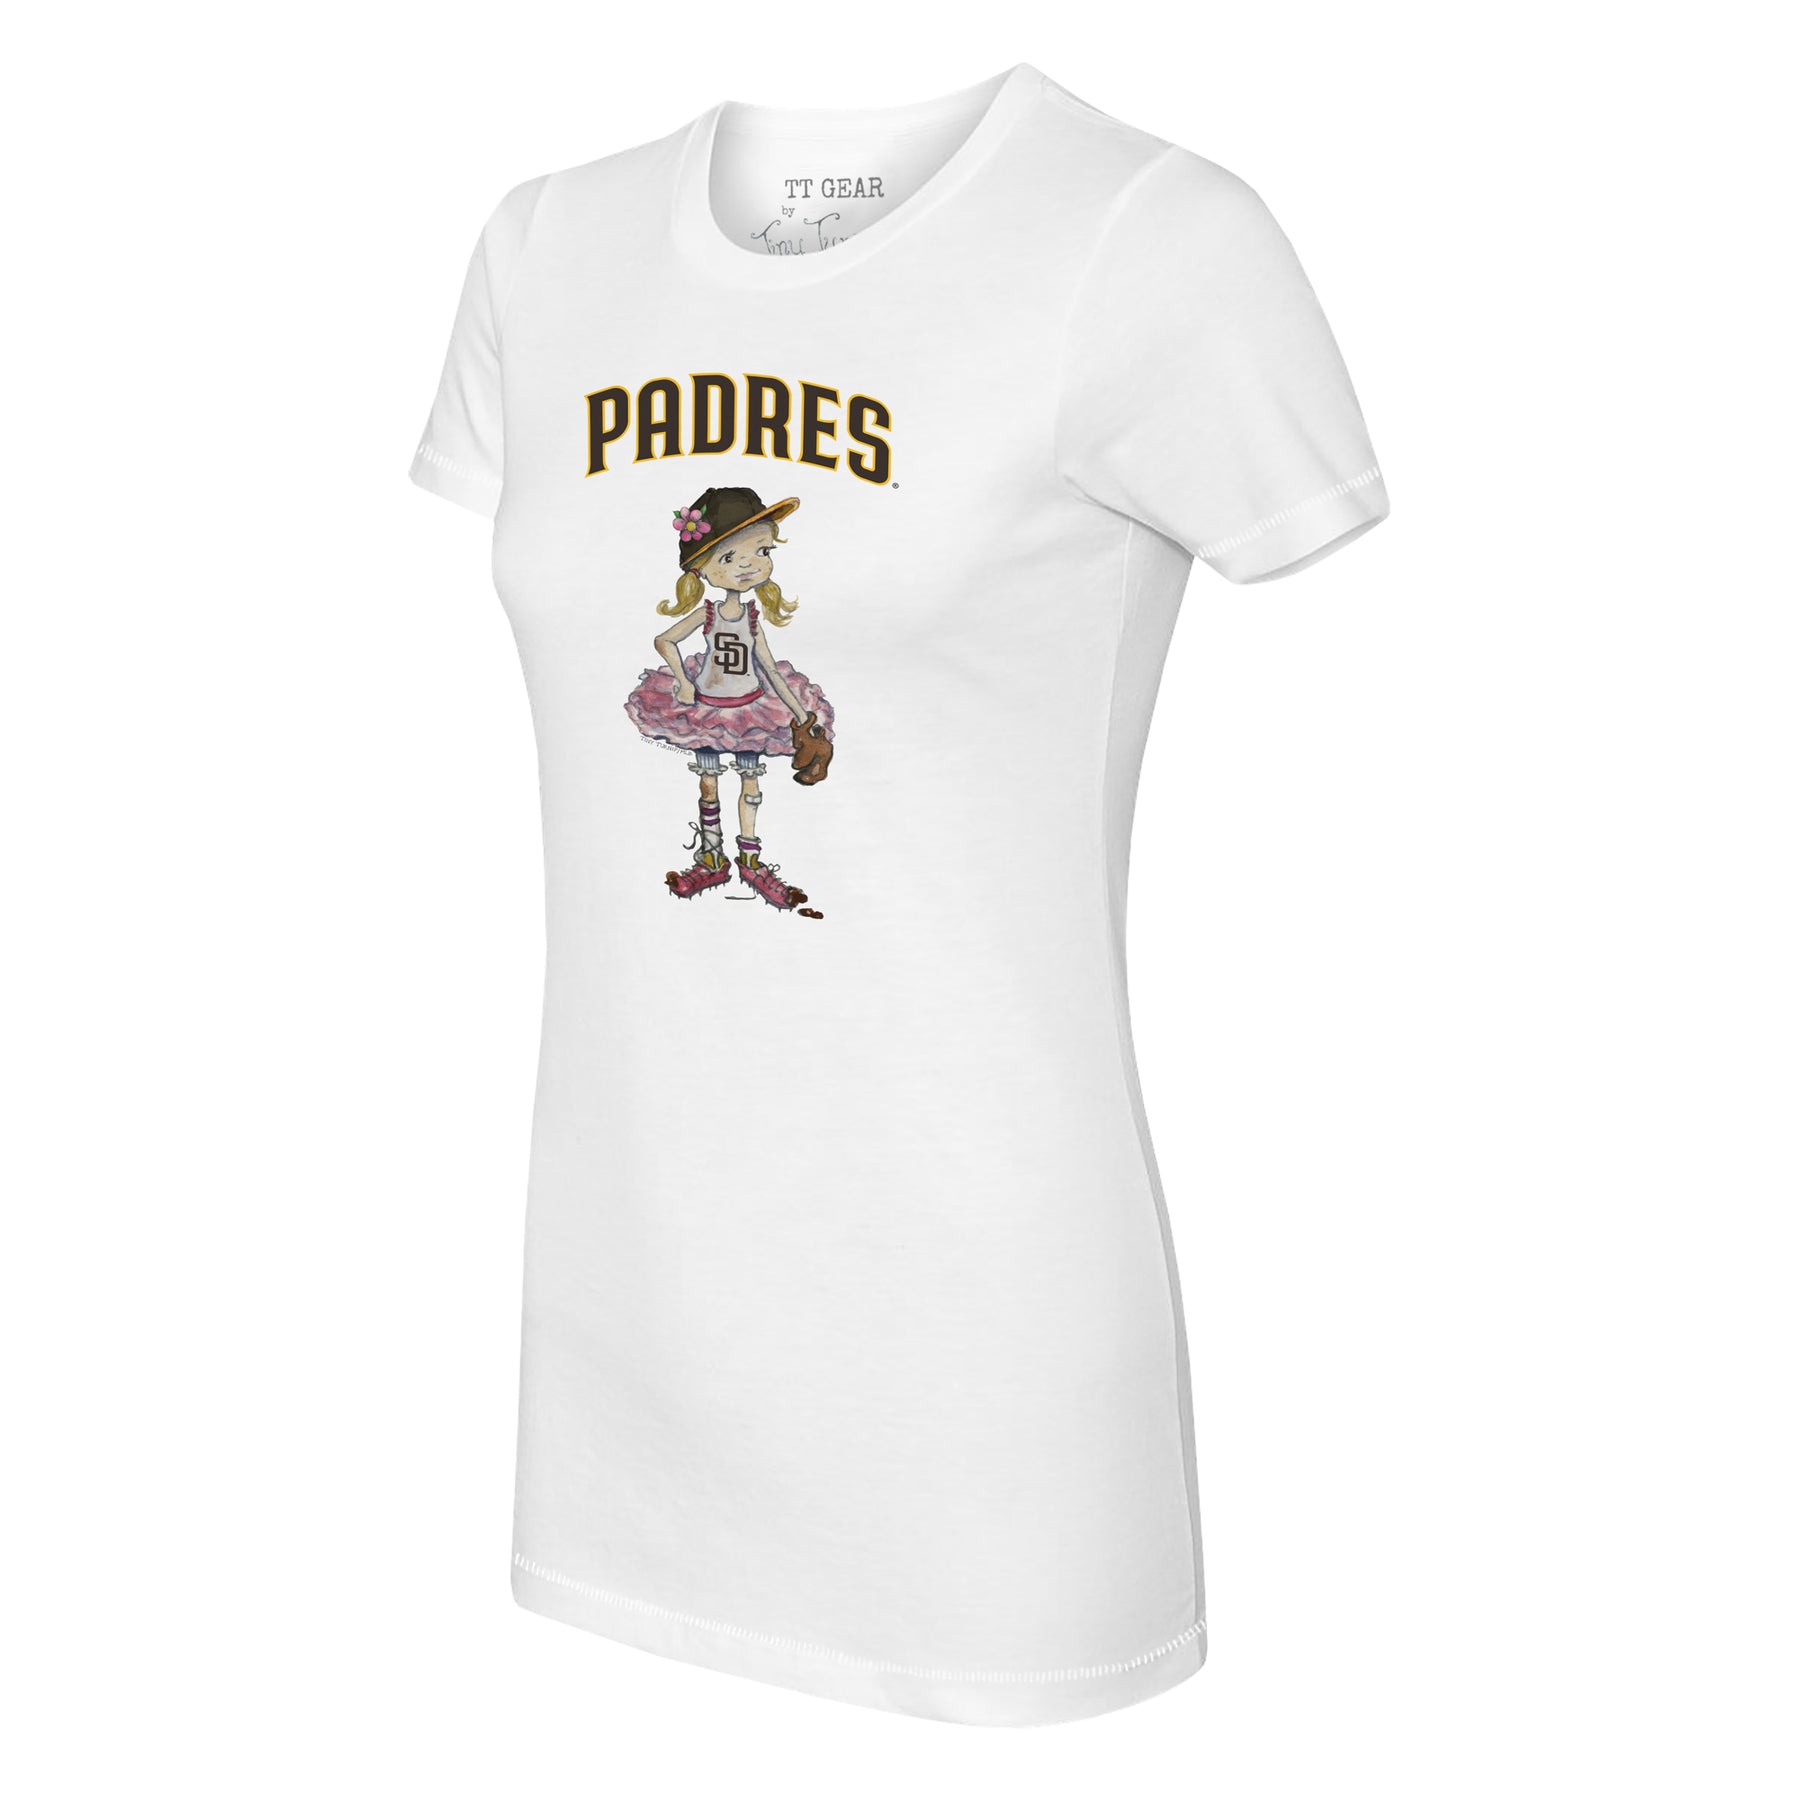 Tiny Turnip San Diego Padres Babes Tee Shirt Women's XS / White